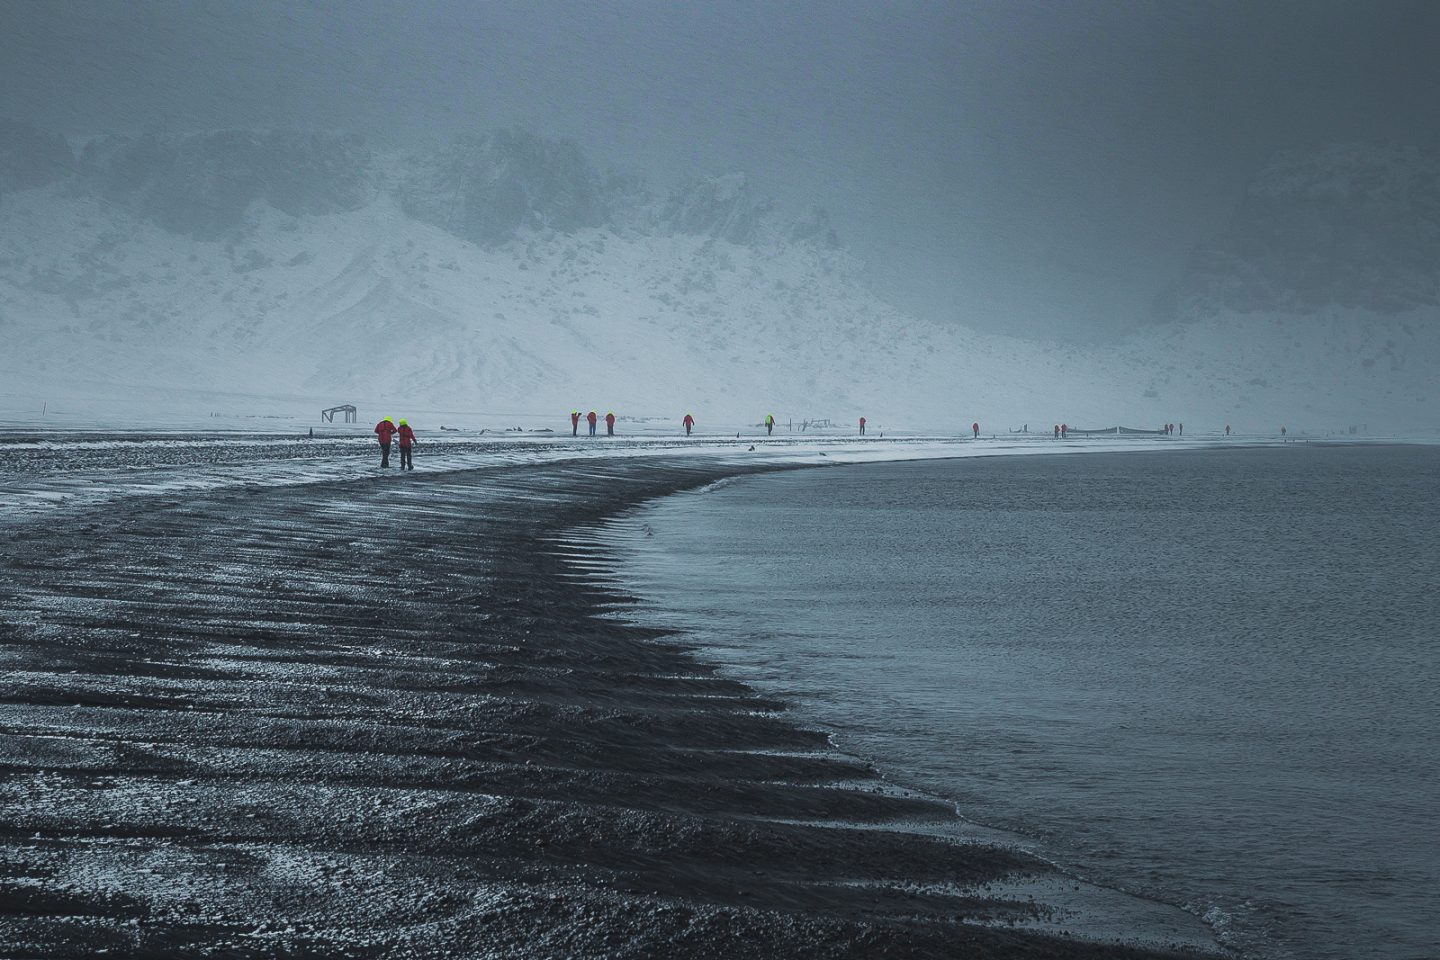 Where the polar plunge happened, Deception Island